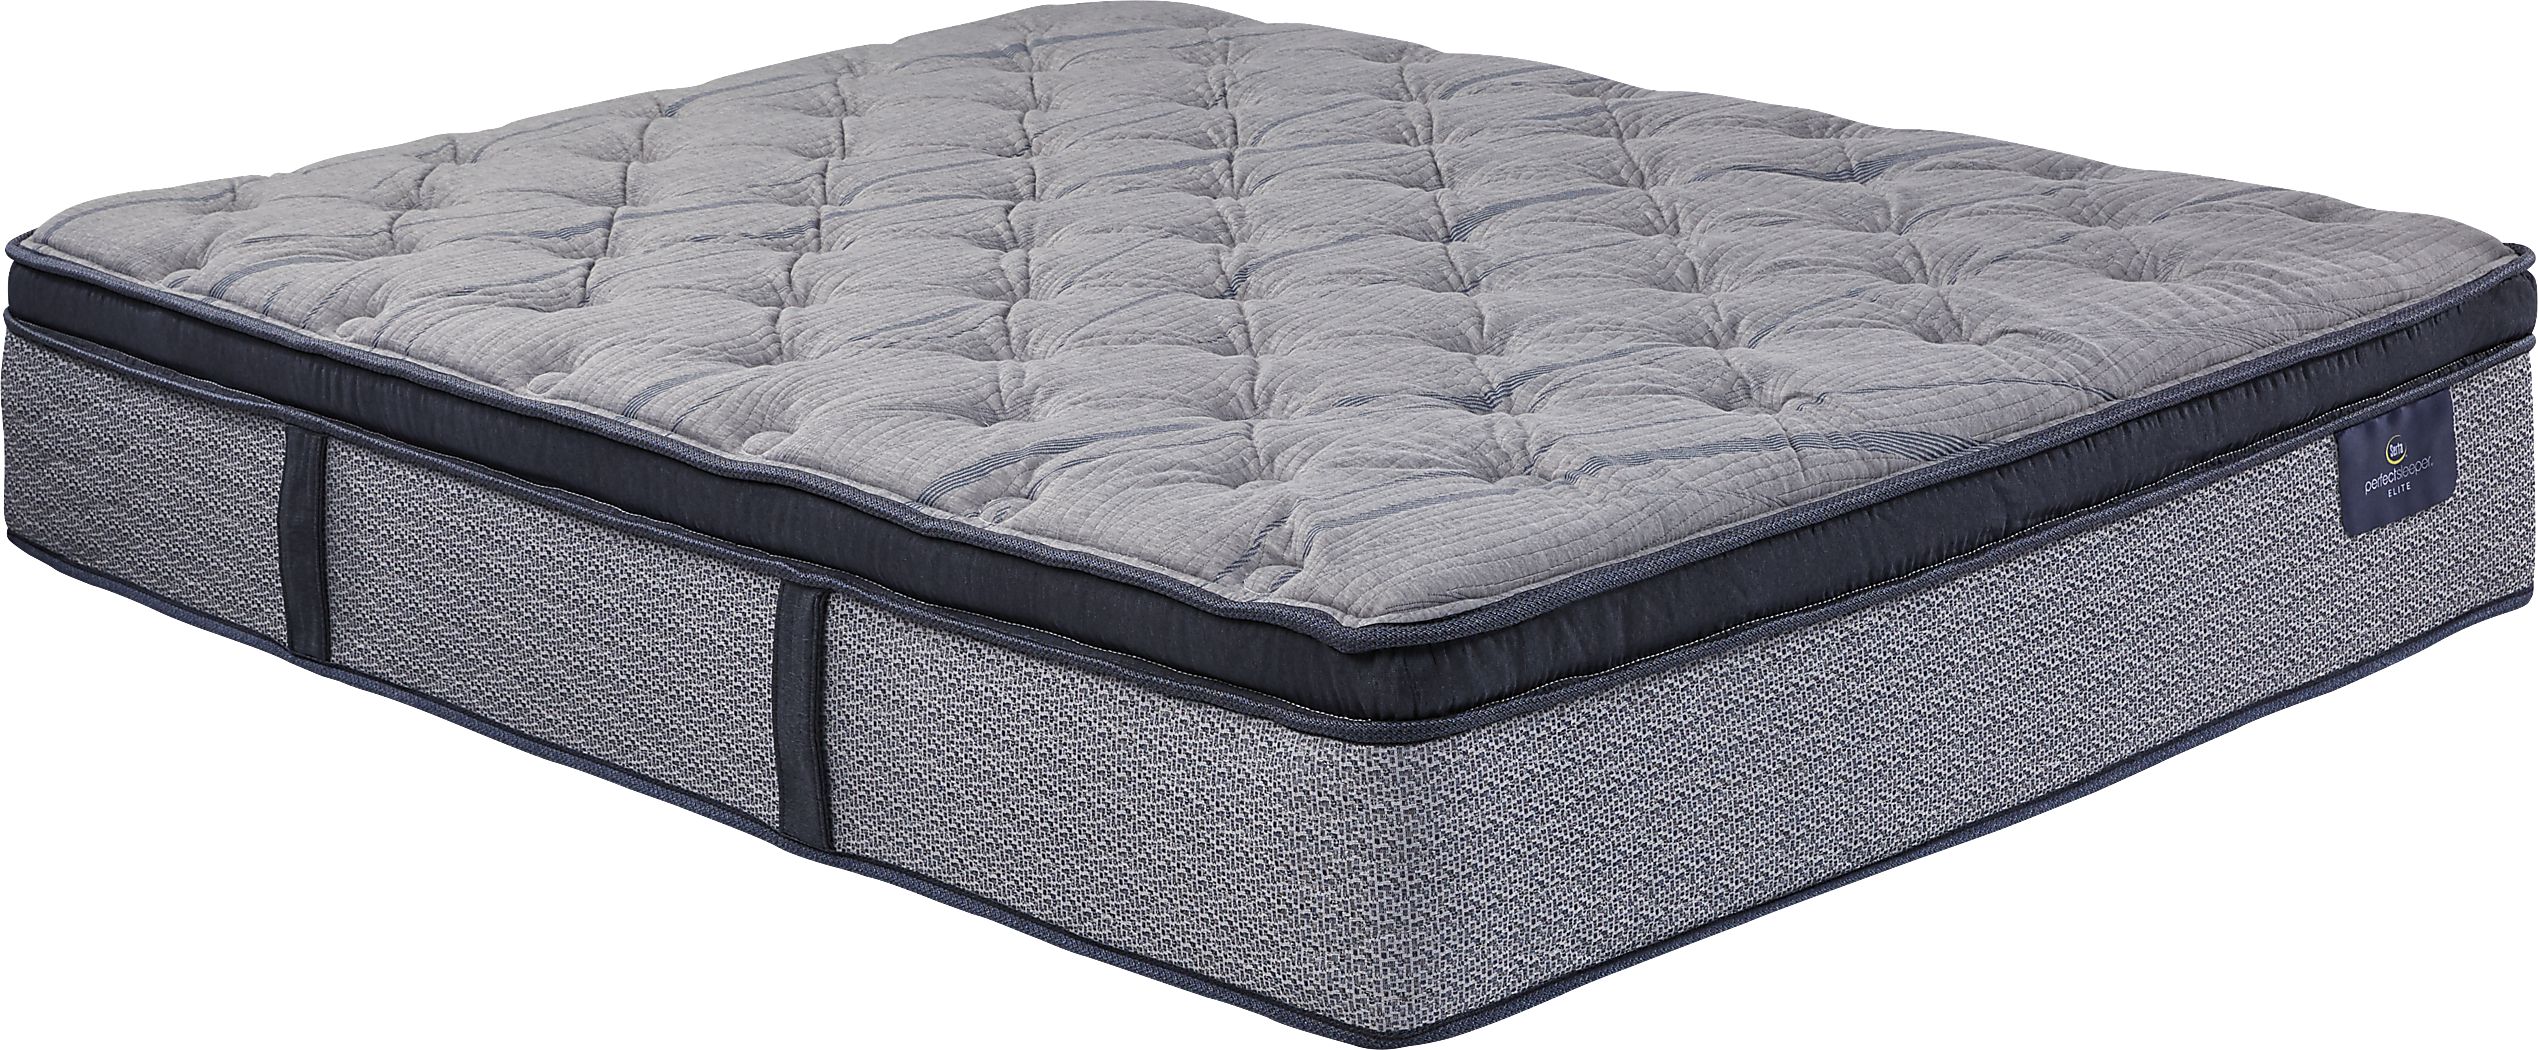 serta pine futon mattress reviews